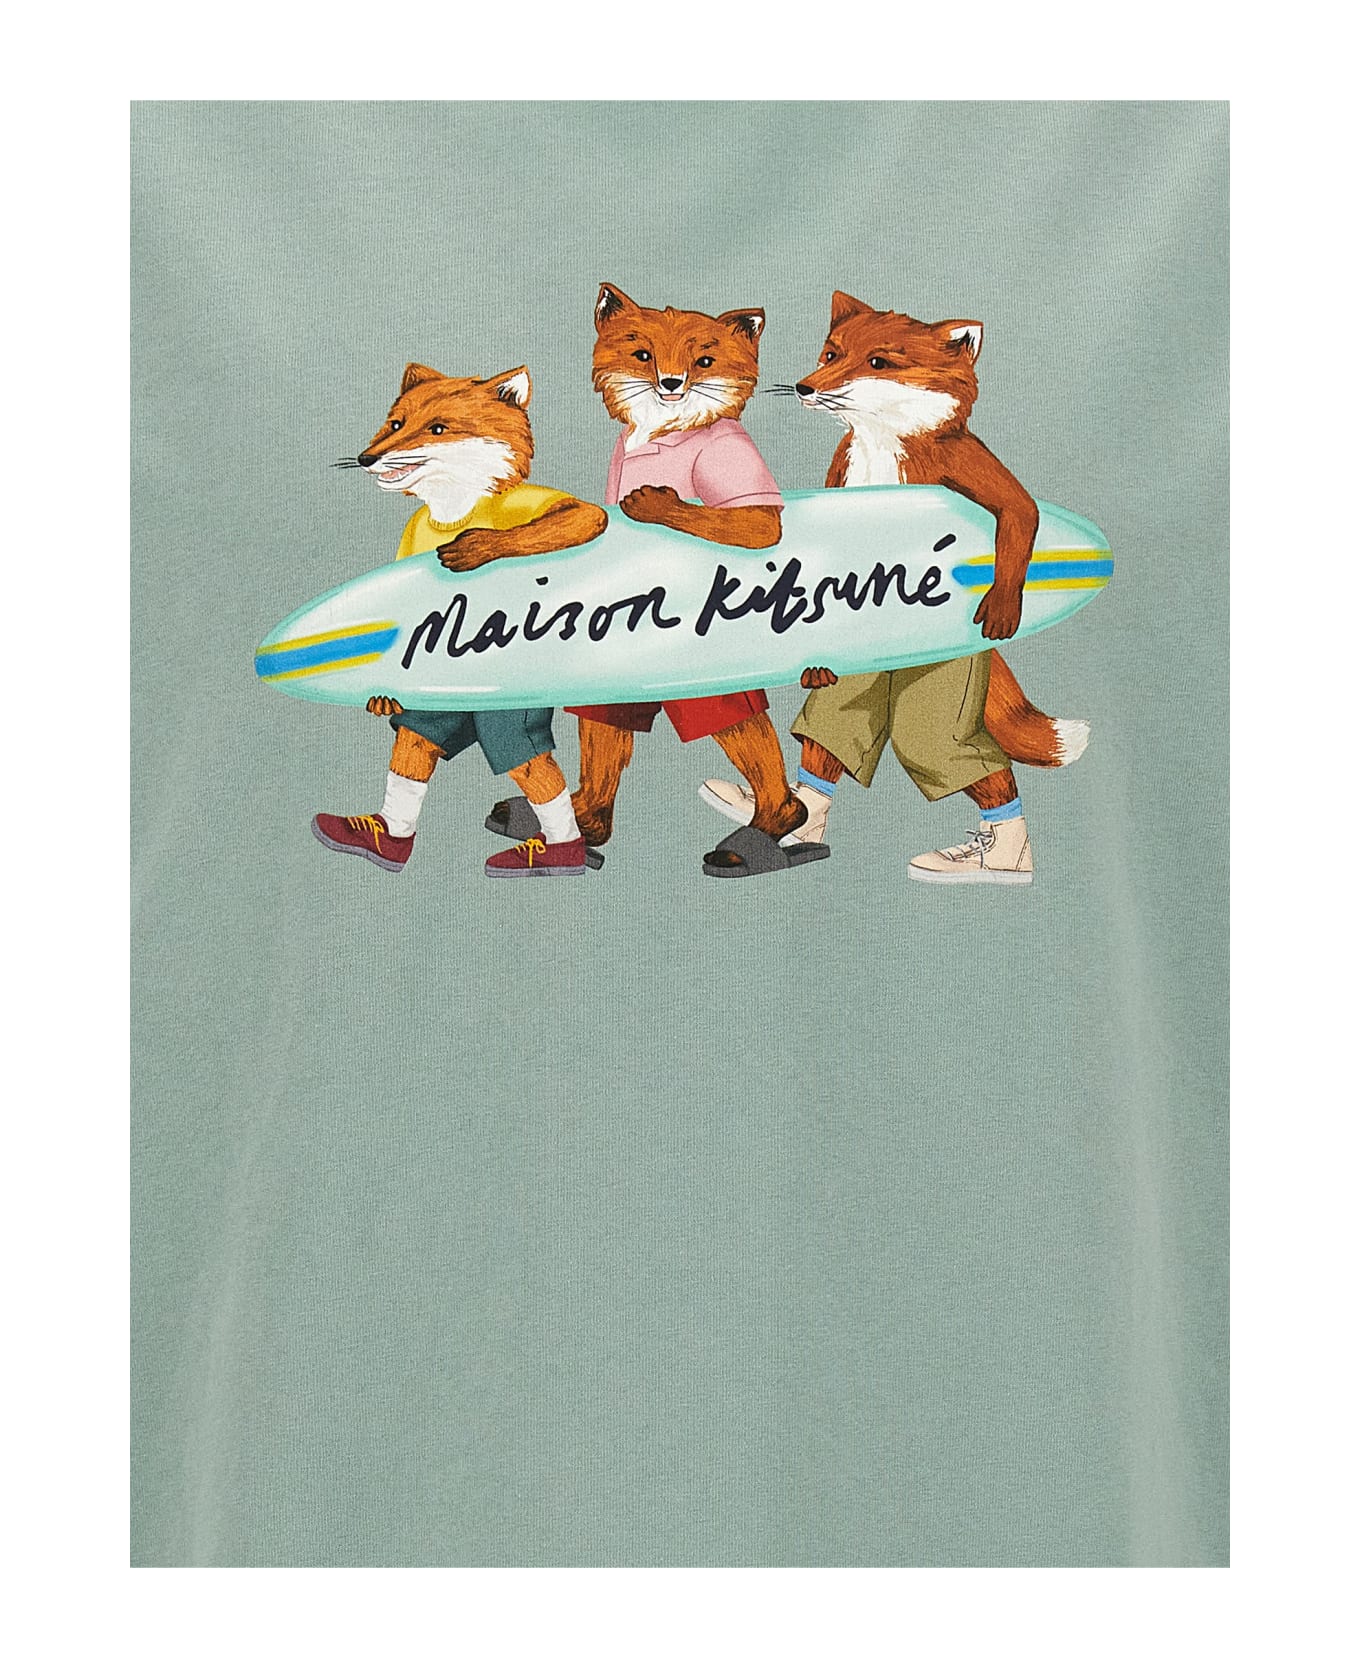 Maison Kitsuné 'surfing Foxes' T-shirt - Light Blue